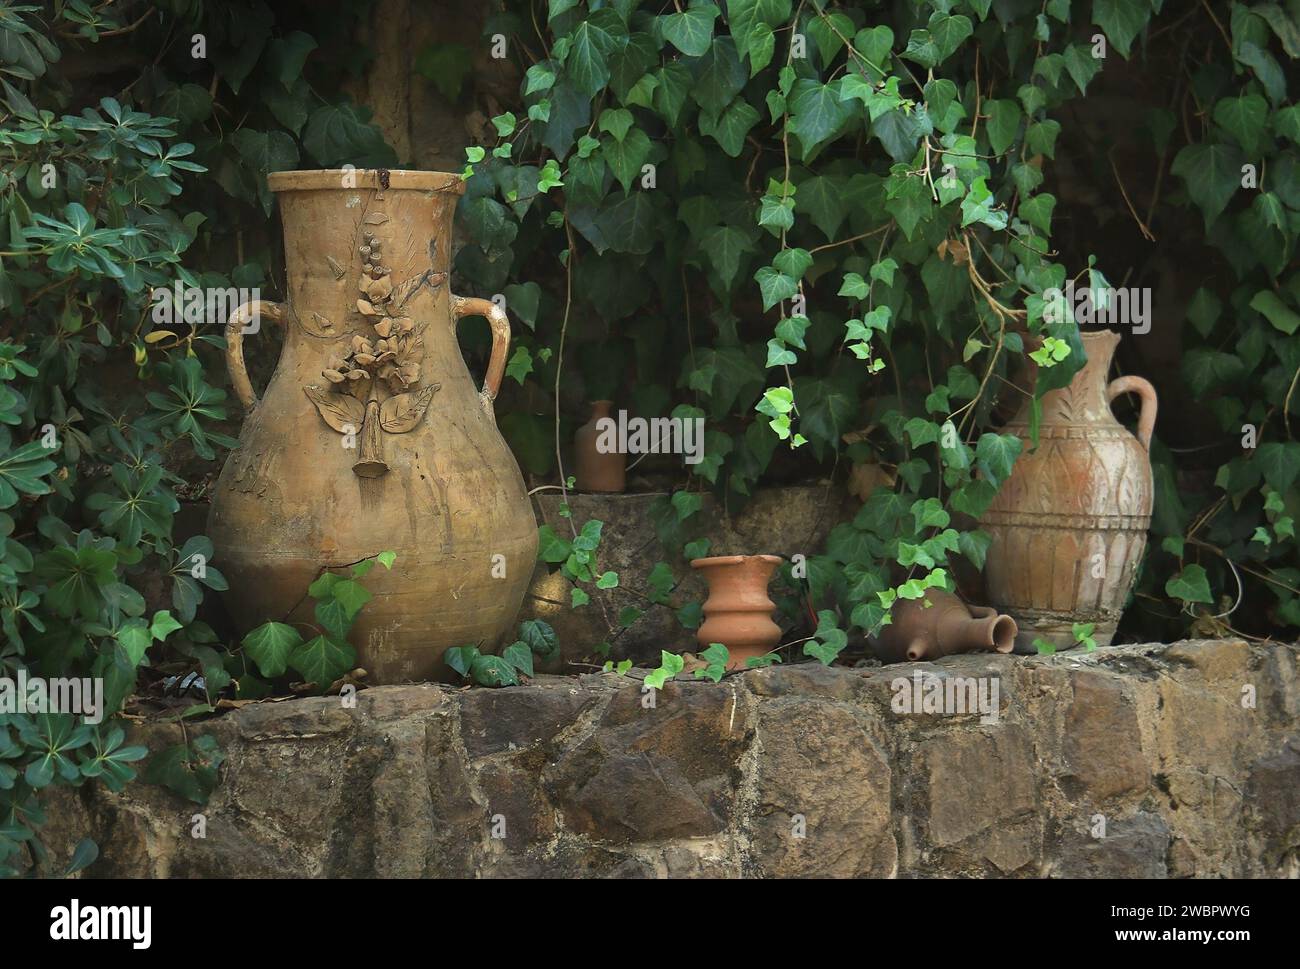 Lebanese terracotta jars in a lush green garden. Stock Photo